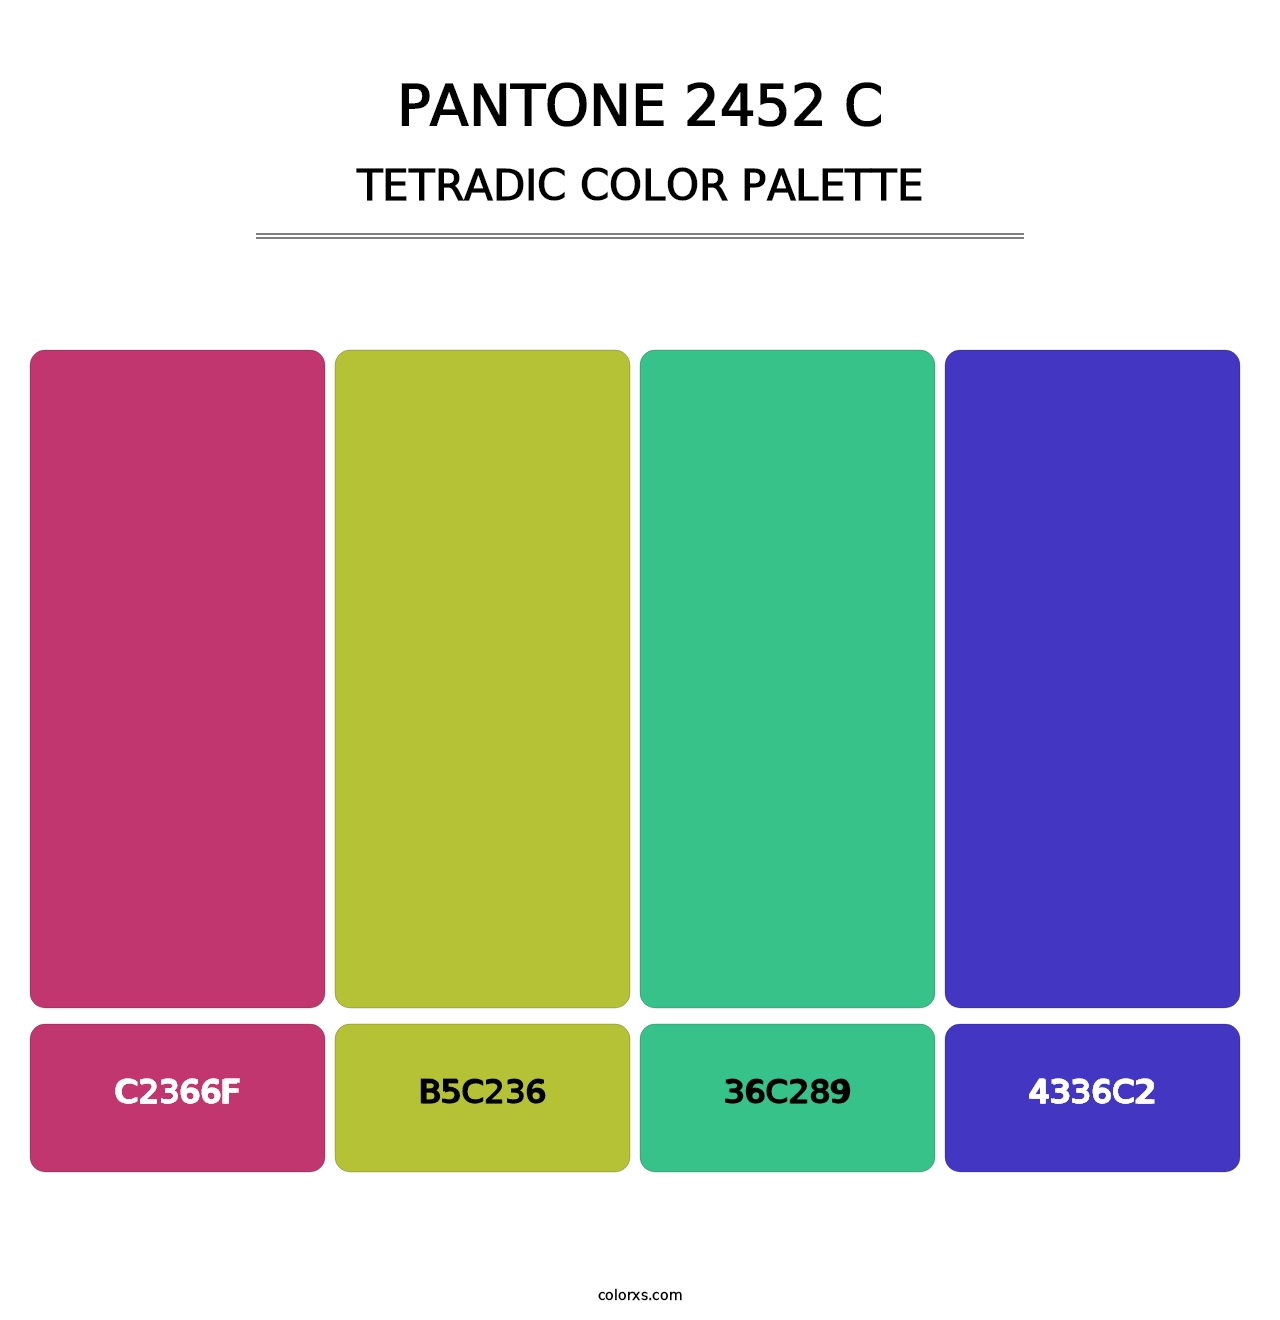 PANTONE 2452 C - Tetradic Color Palette